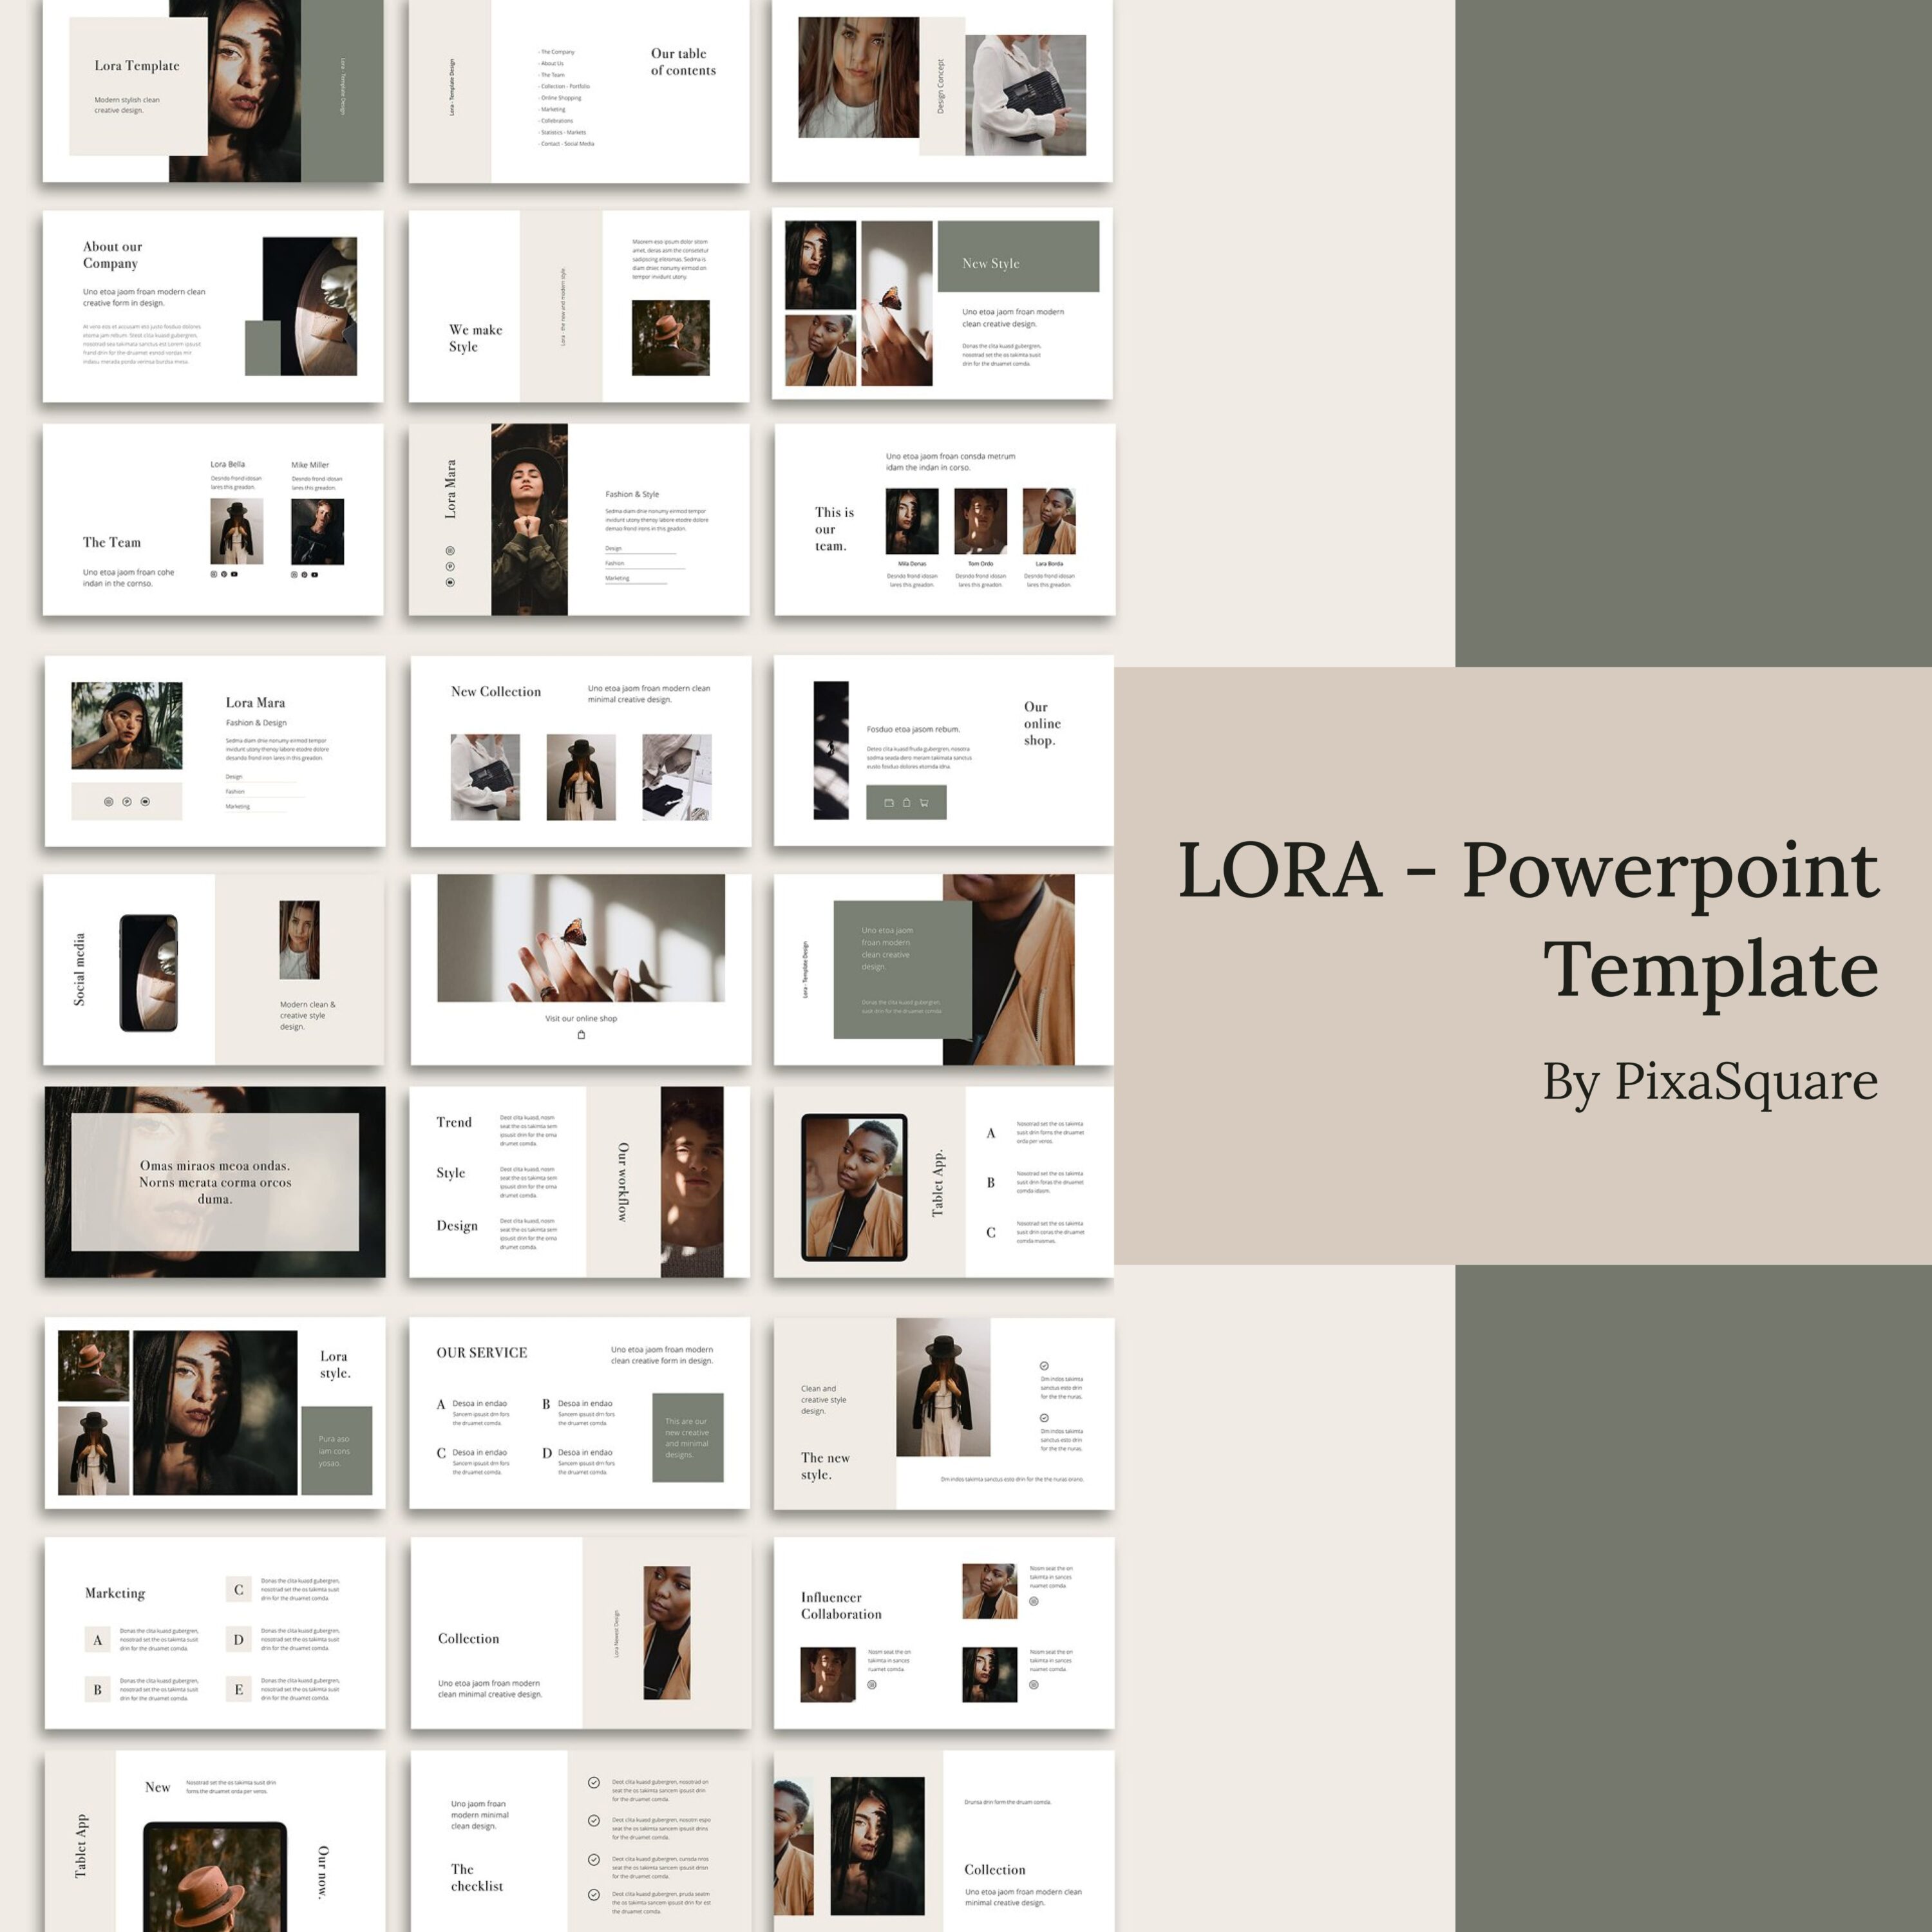 LORA - Powerpoint Template.